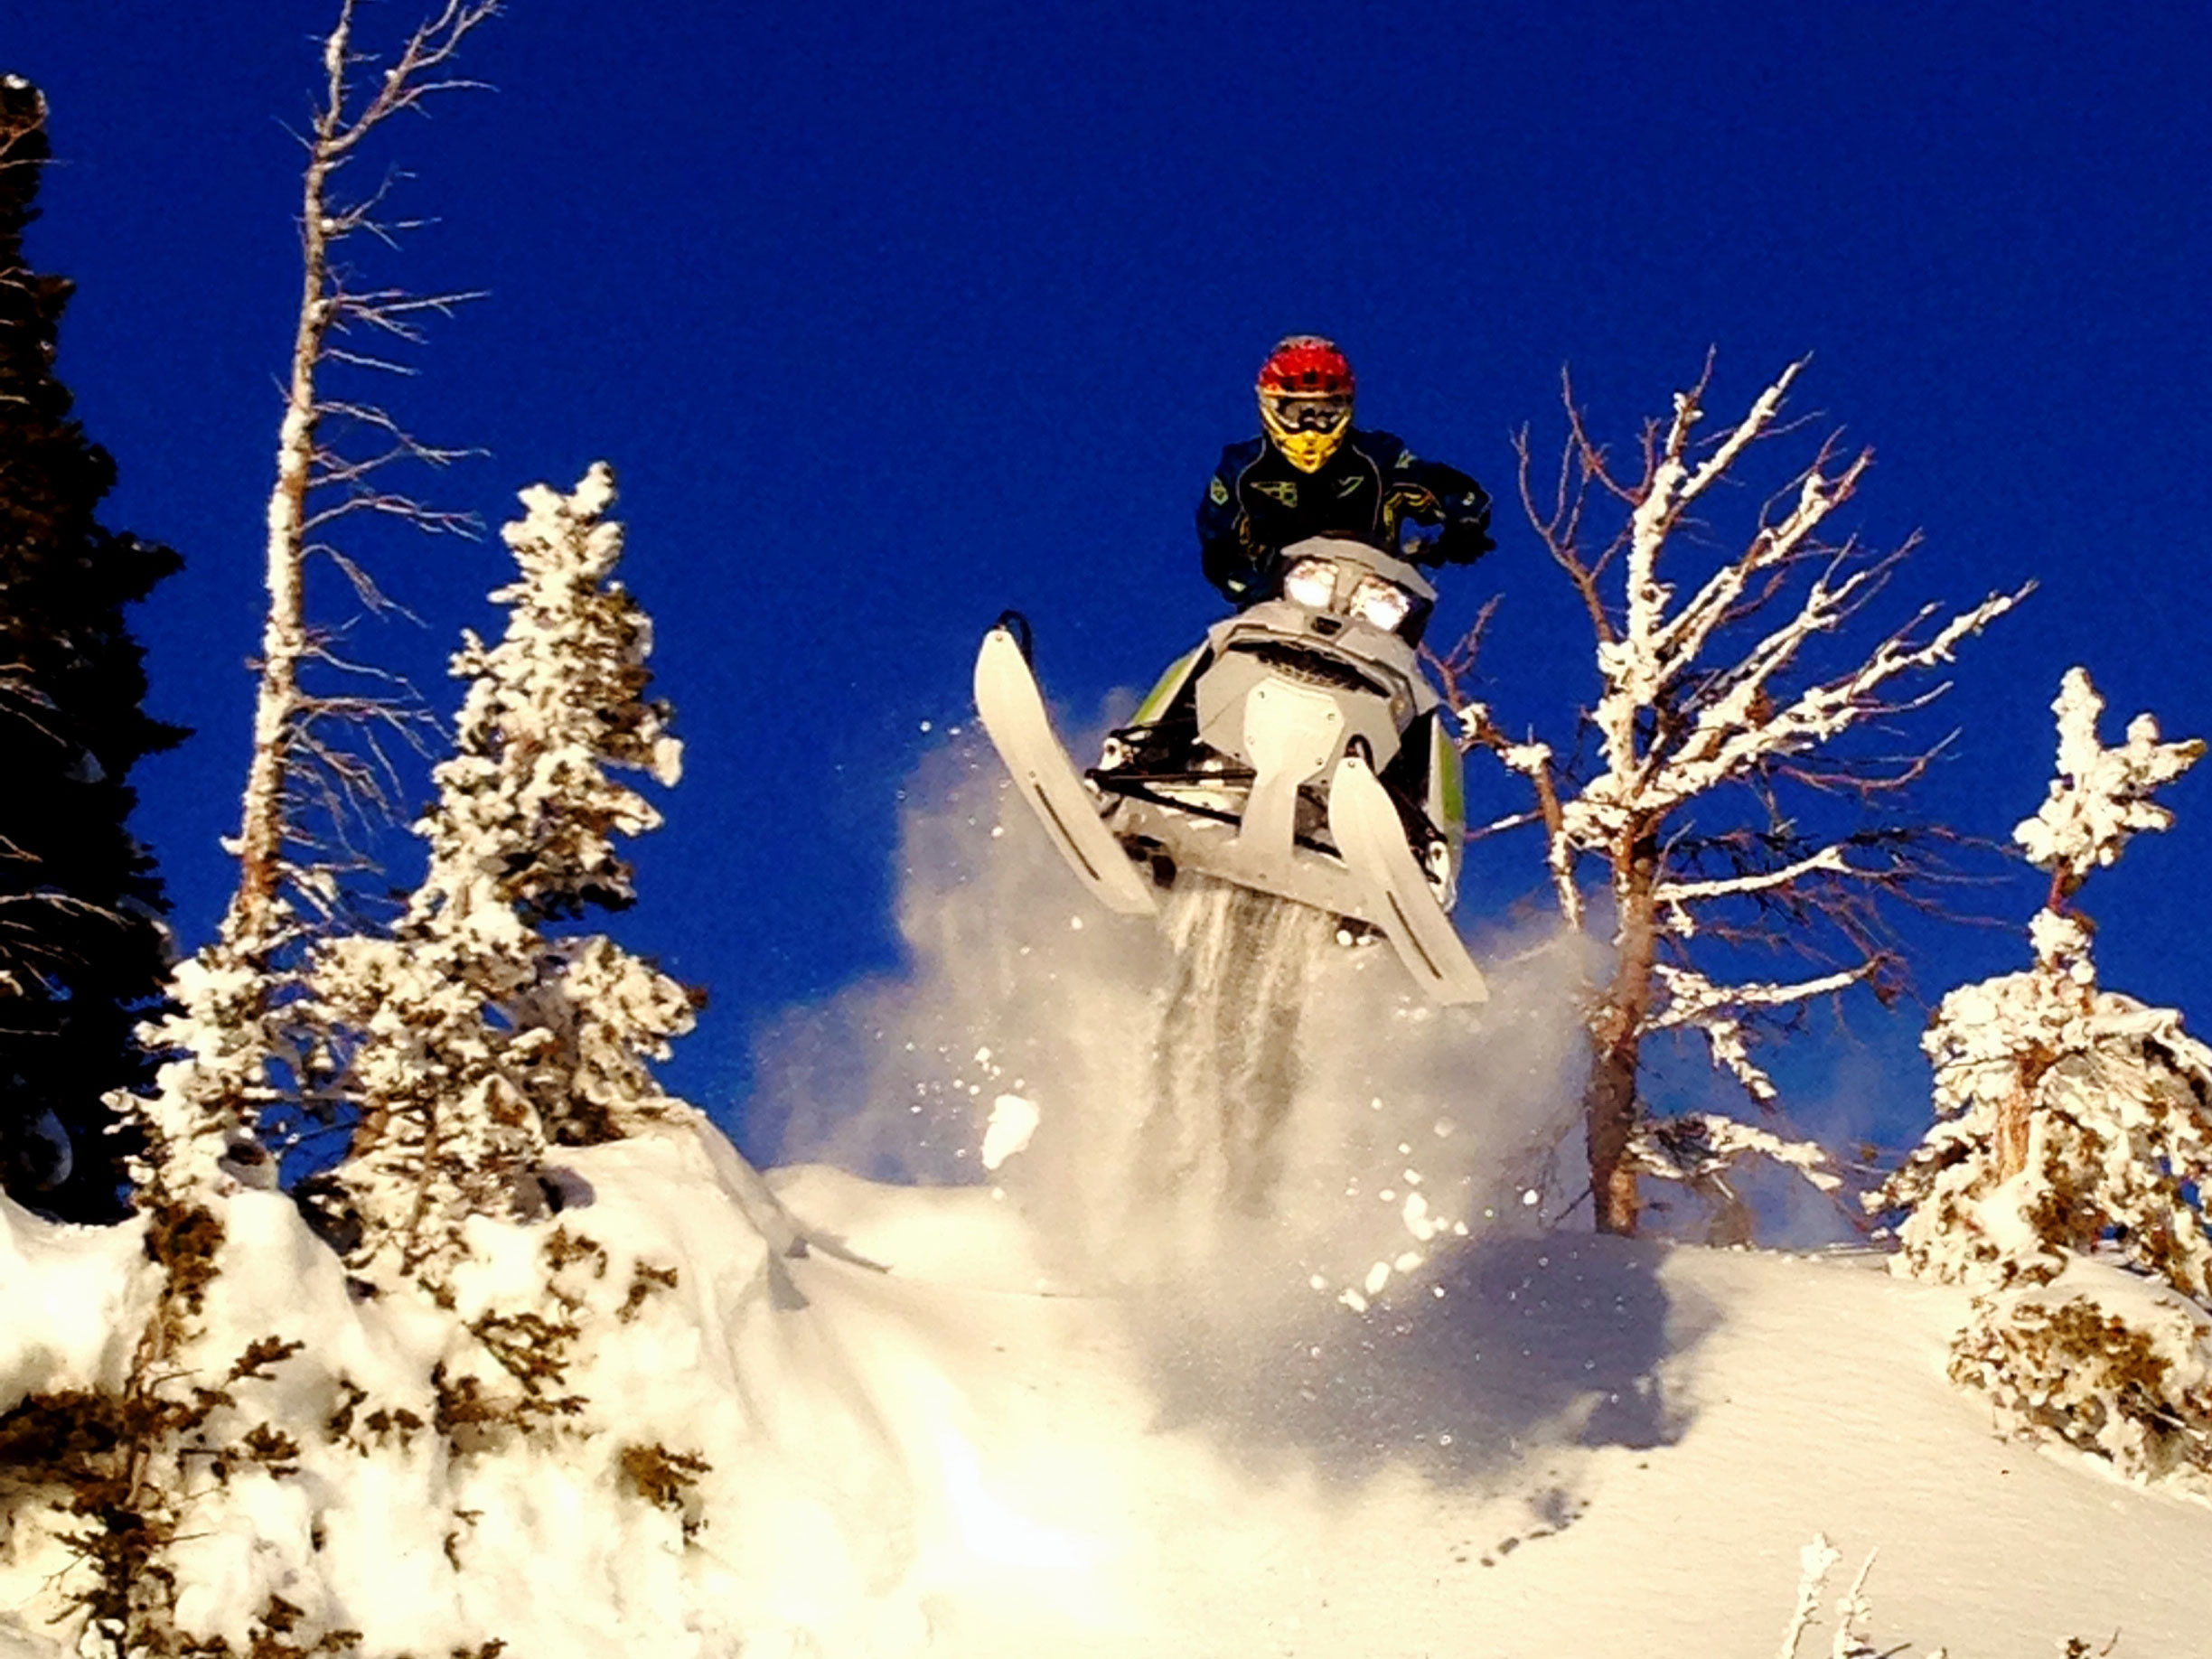 Steve Martin jumping on his Ski-Doo snowmobile